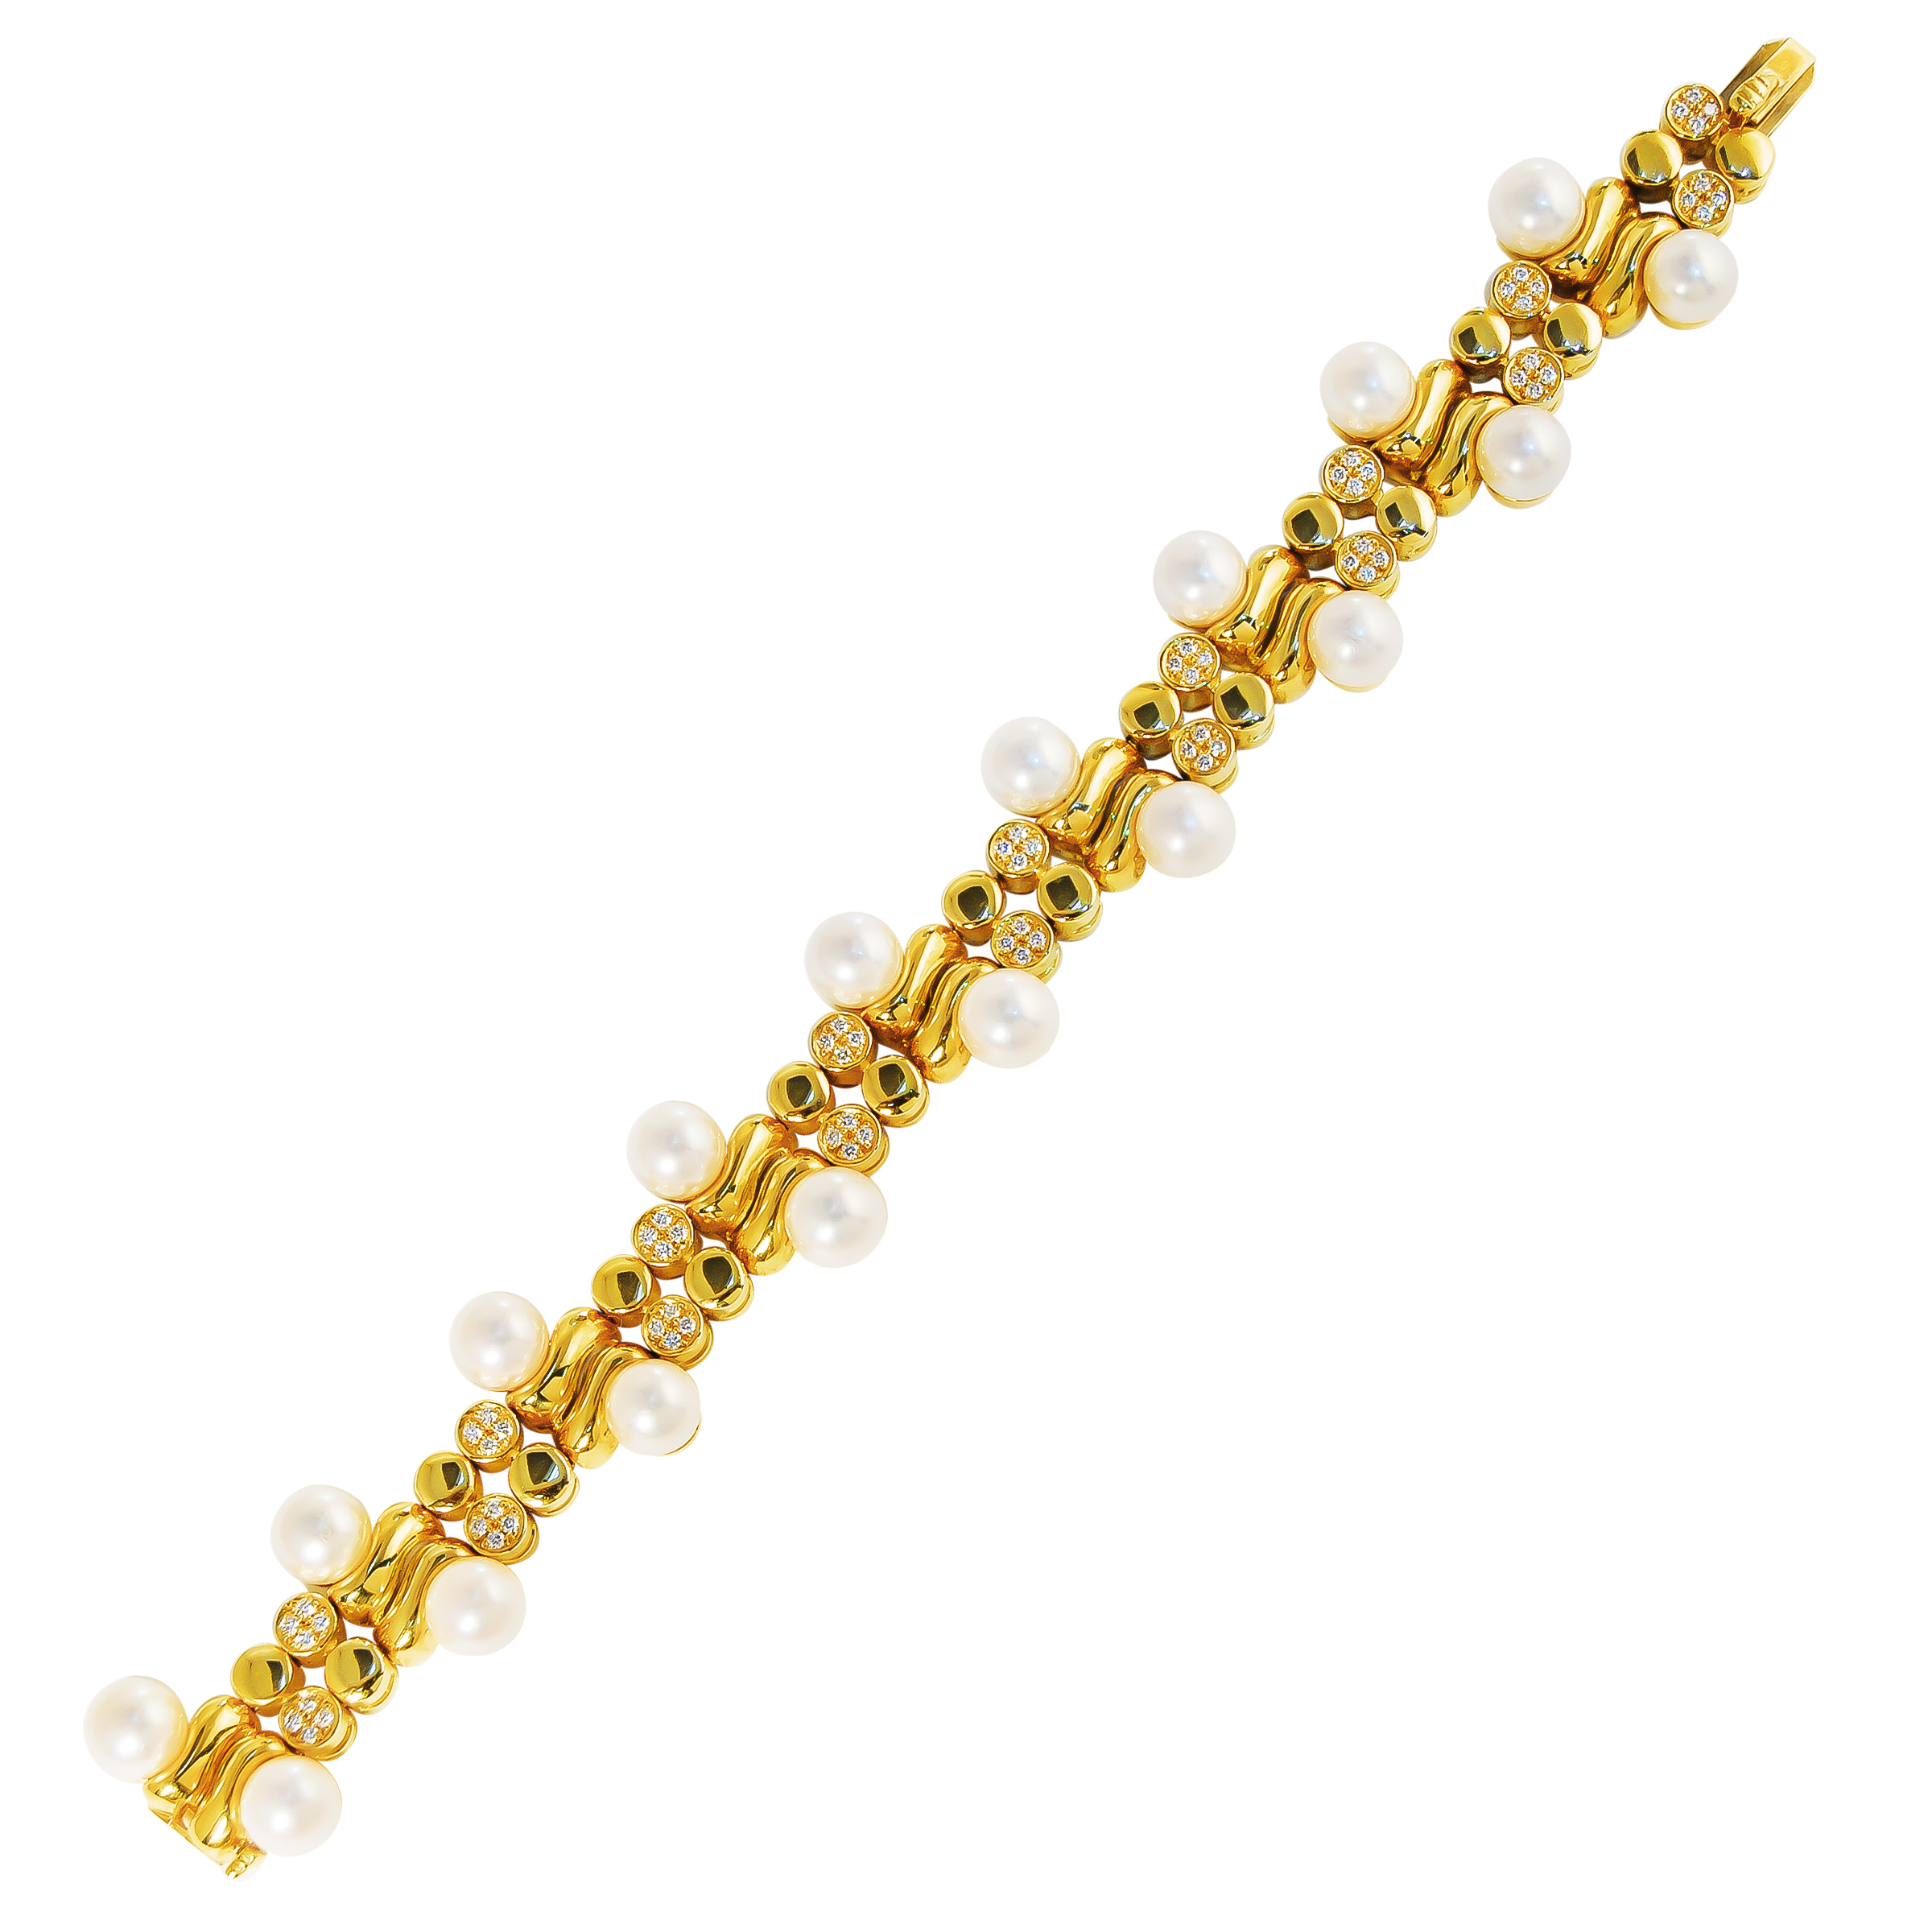 Pearl Bracelet - Kaufmann de Suisse Diamond Jewelery Palm Beach FL